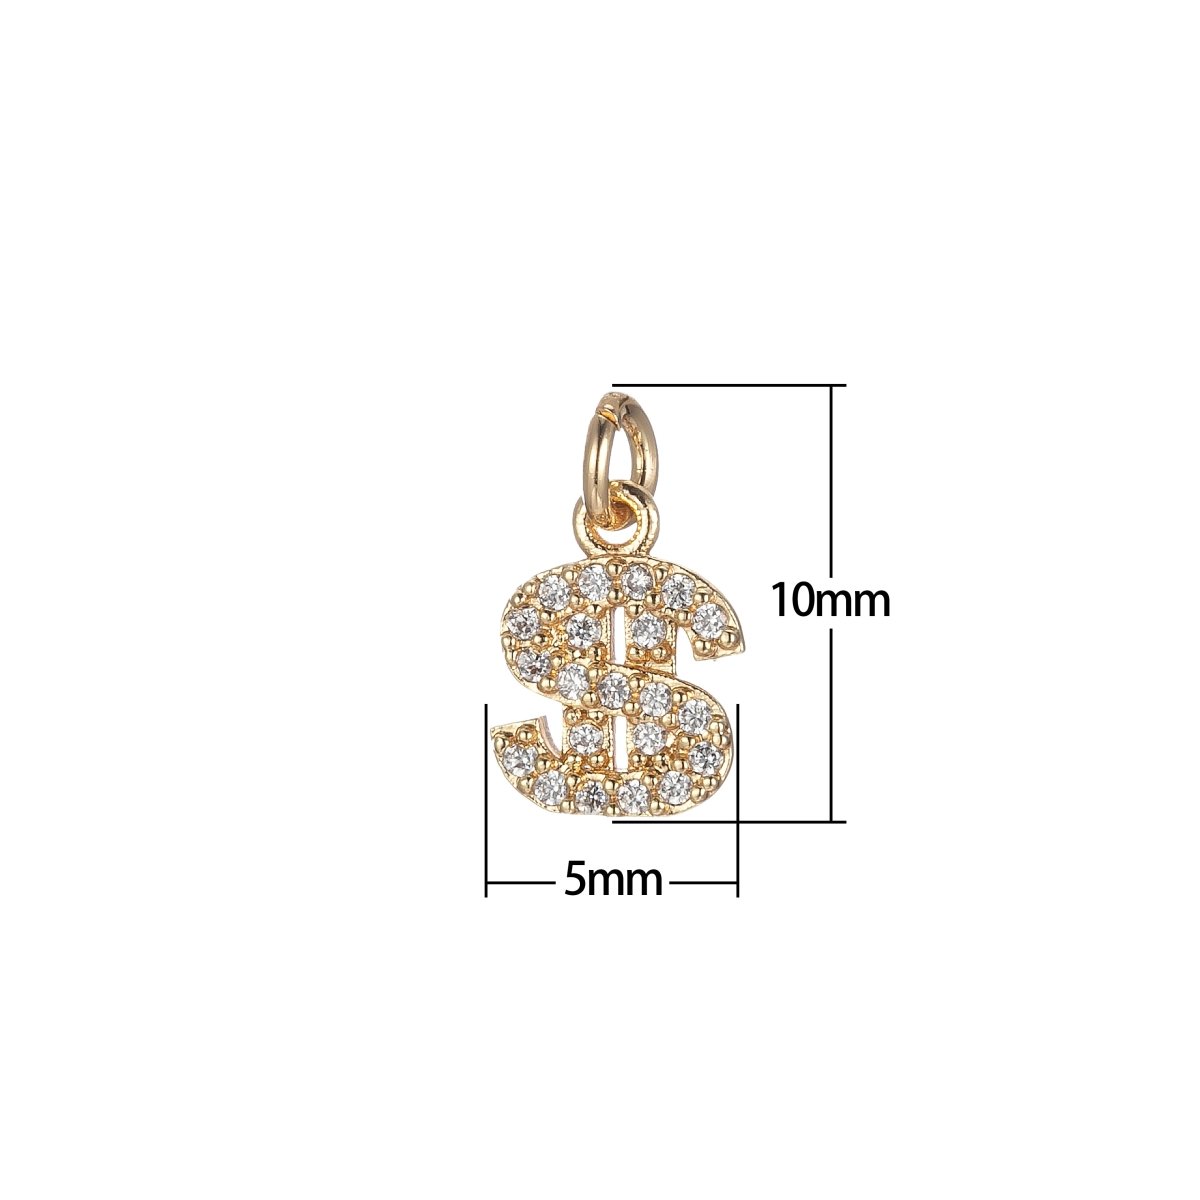 1x Micro Pave dollar Sign Charm Cubic Money Charm Millionaire Pendant Charm,Add on Bracelet Necklace Earring Gold E864 - DLUXCA